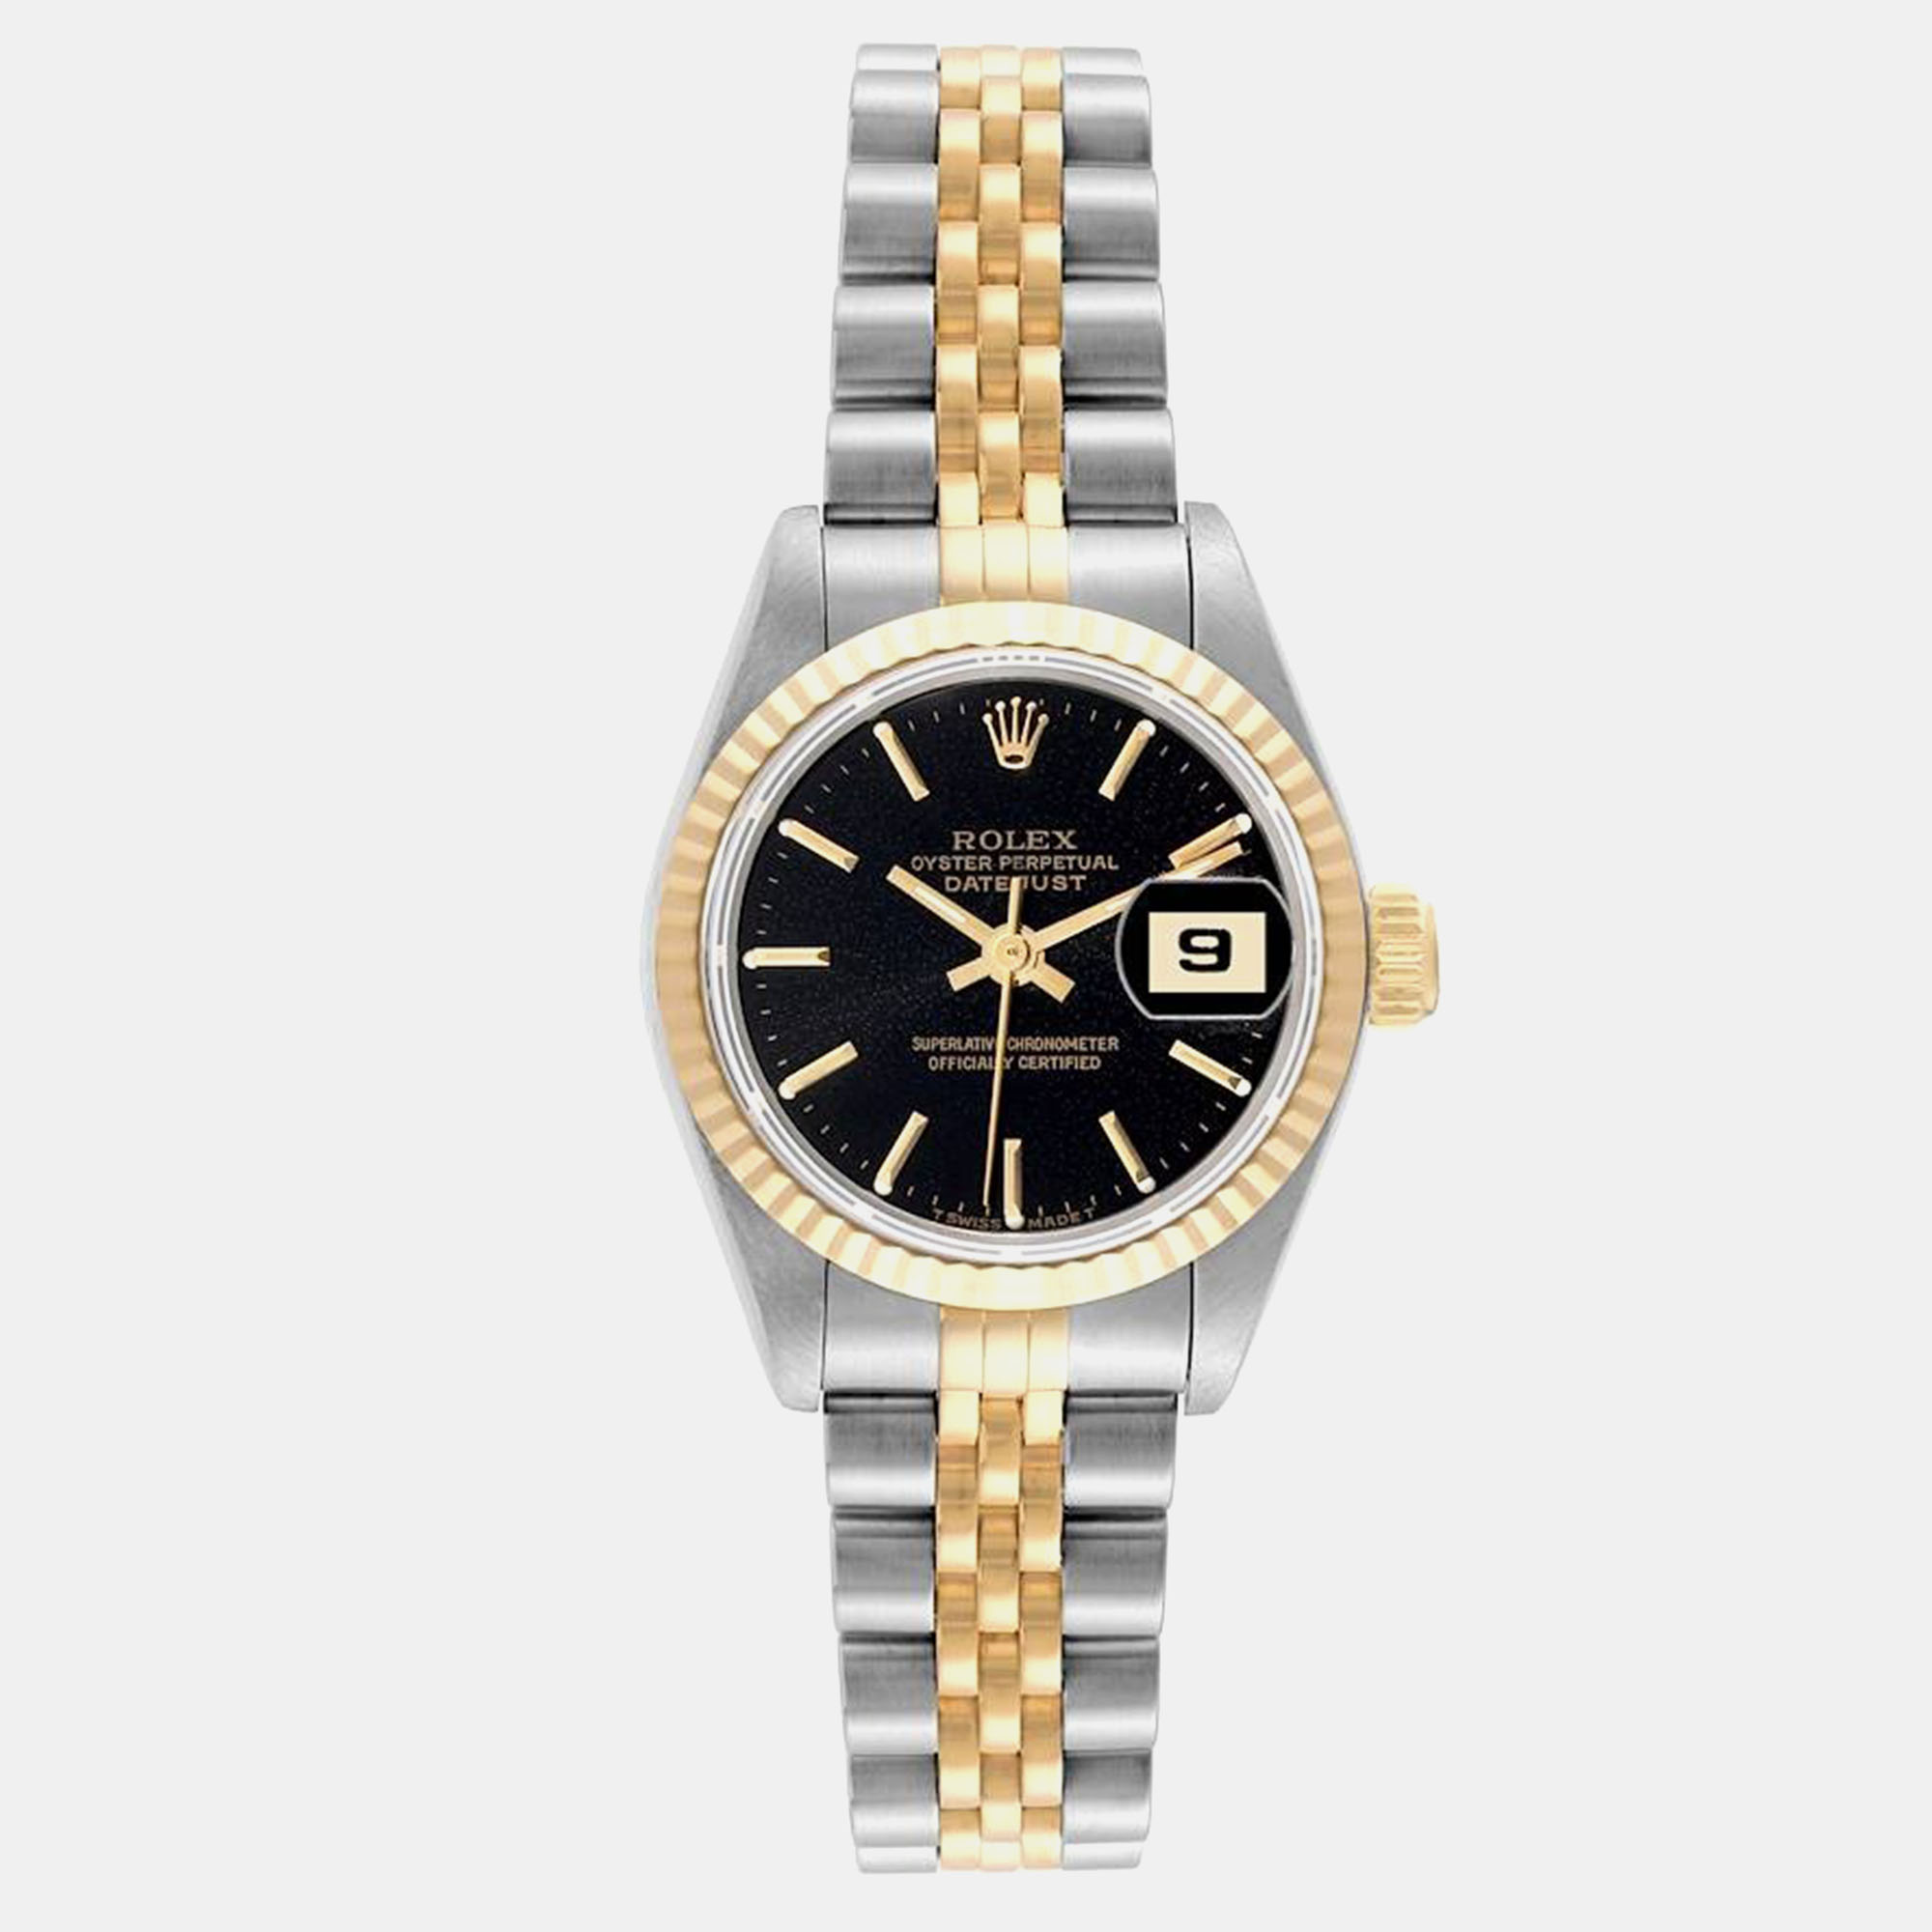 Rolex datejust steel yellow gold black dial ladies watch 26.0 mm